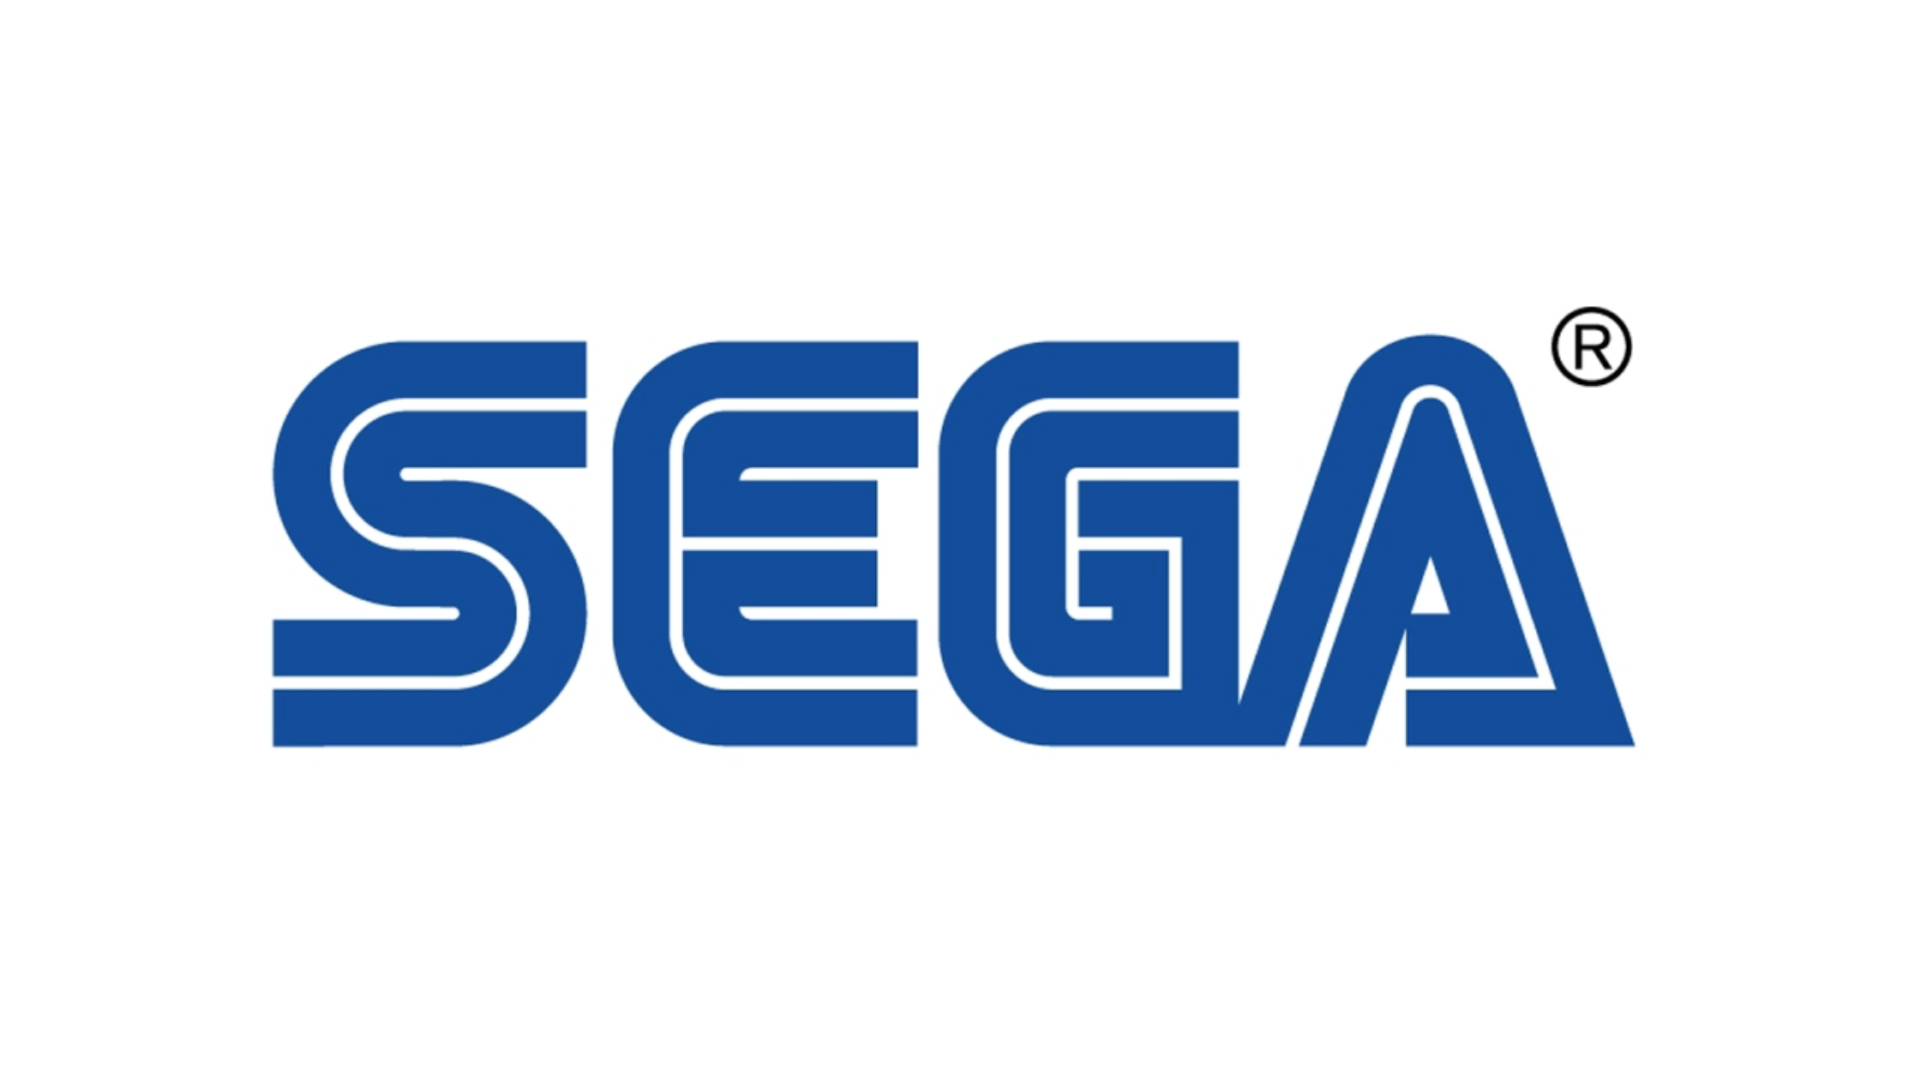 SEGA (Sonic & All-Stars Racing Transformed, 16:9)